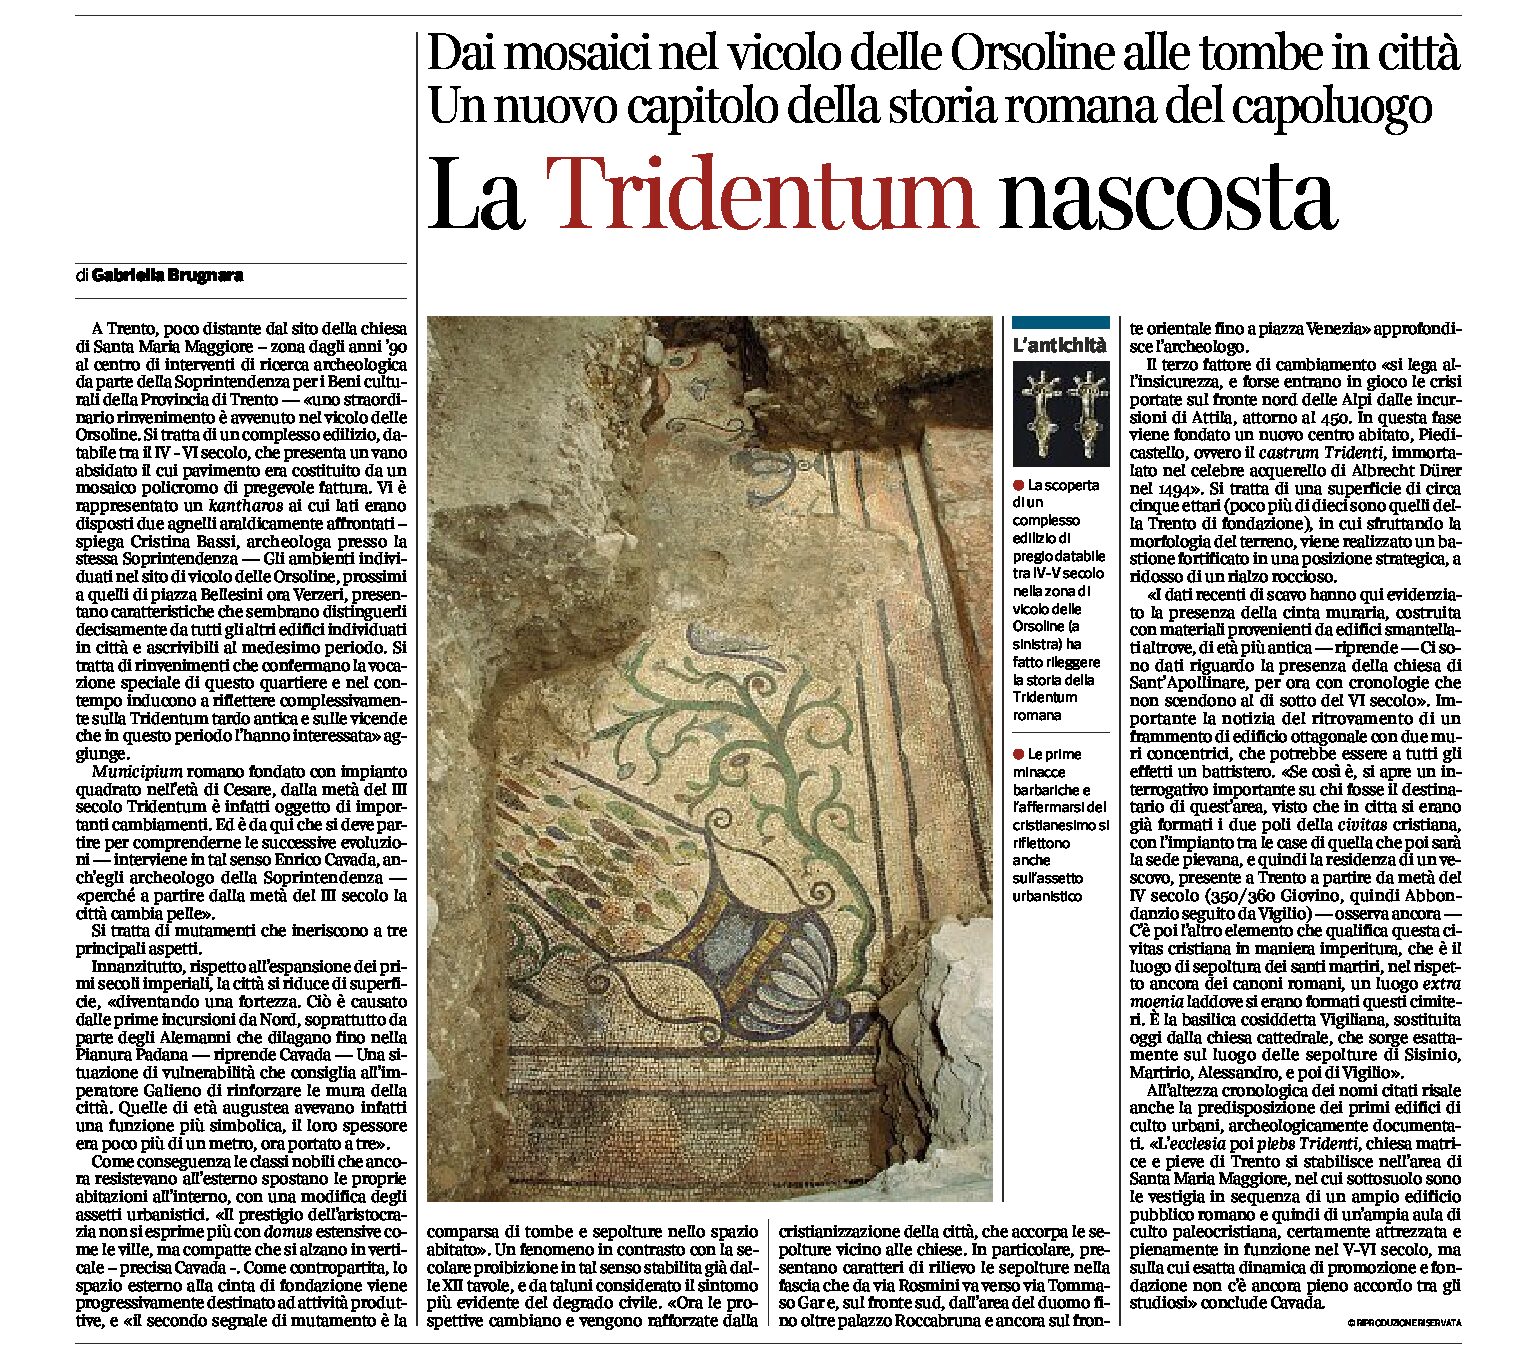 Trento: la Tridentum nascosta